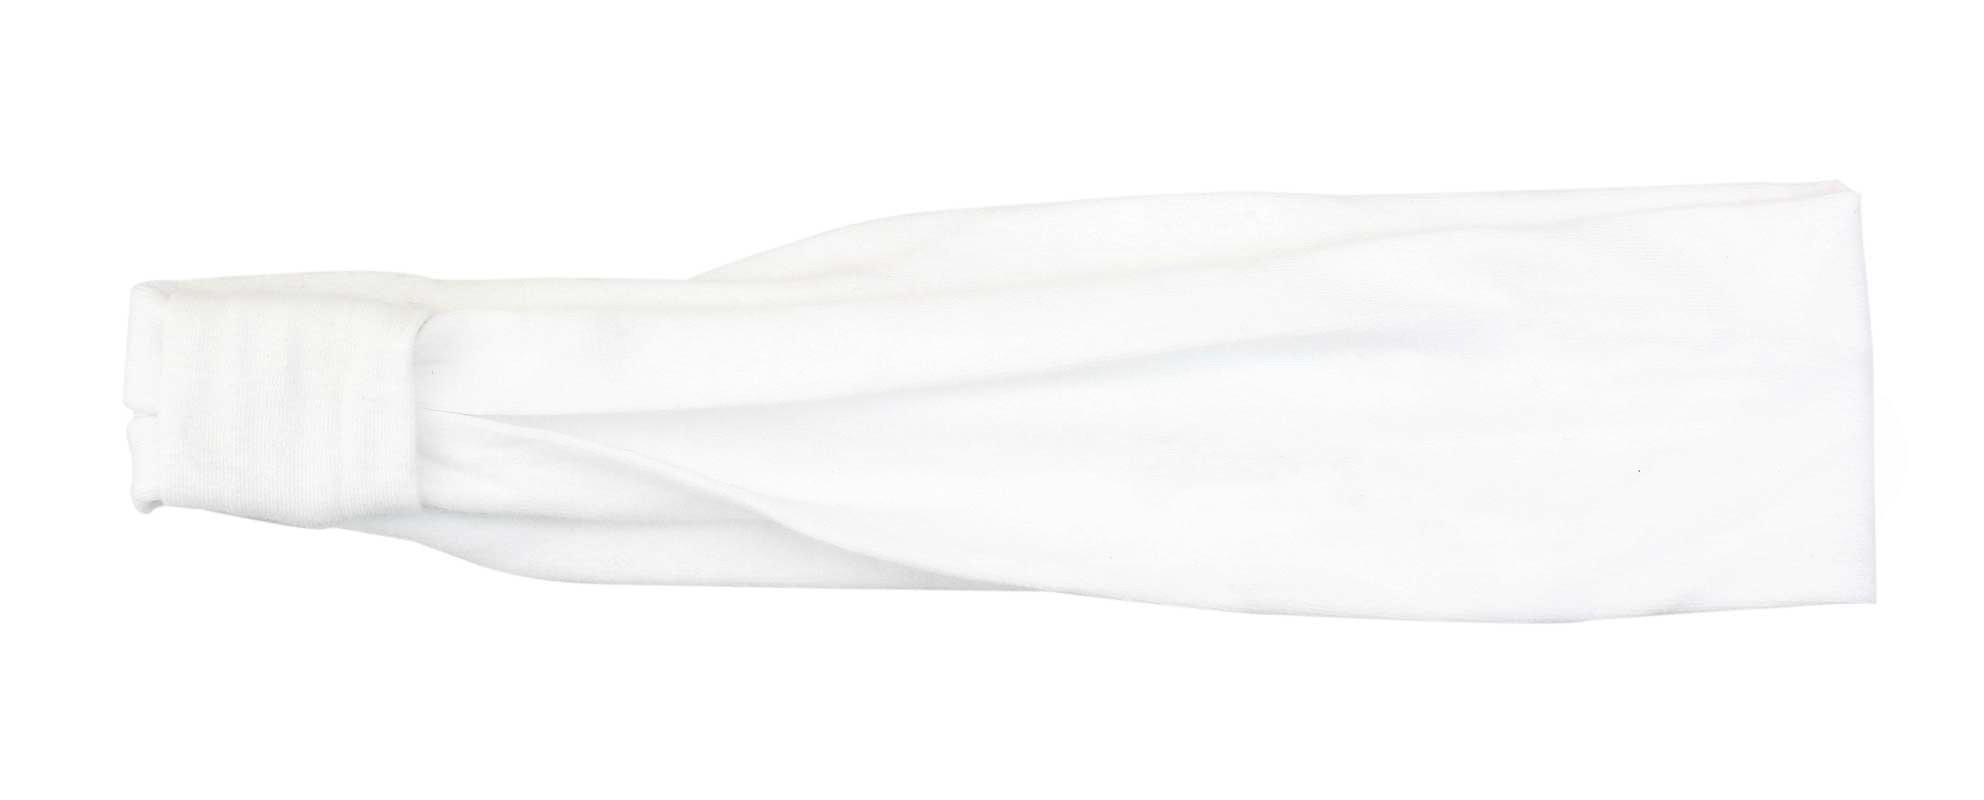 Stirnband weiß - ca. 6,5 x 48 cm